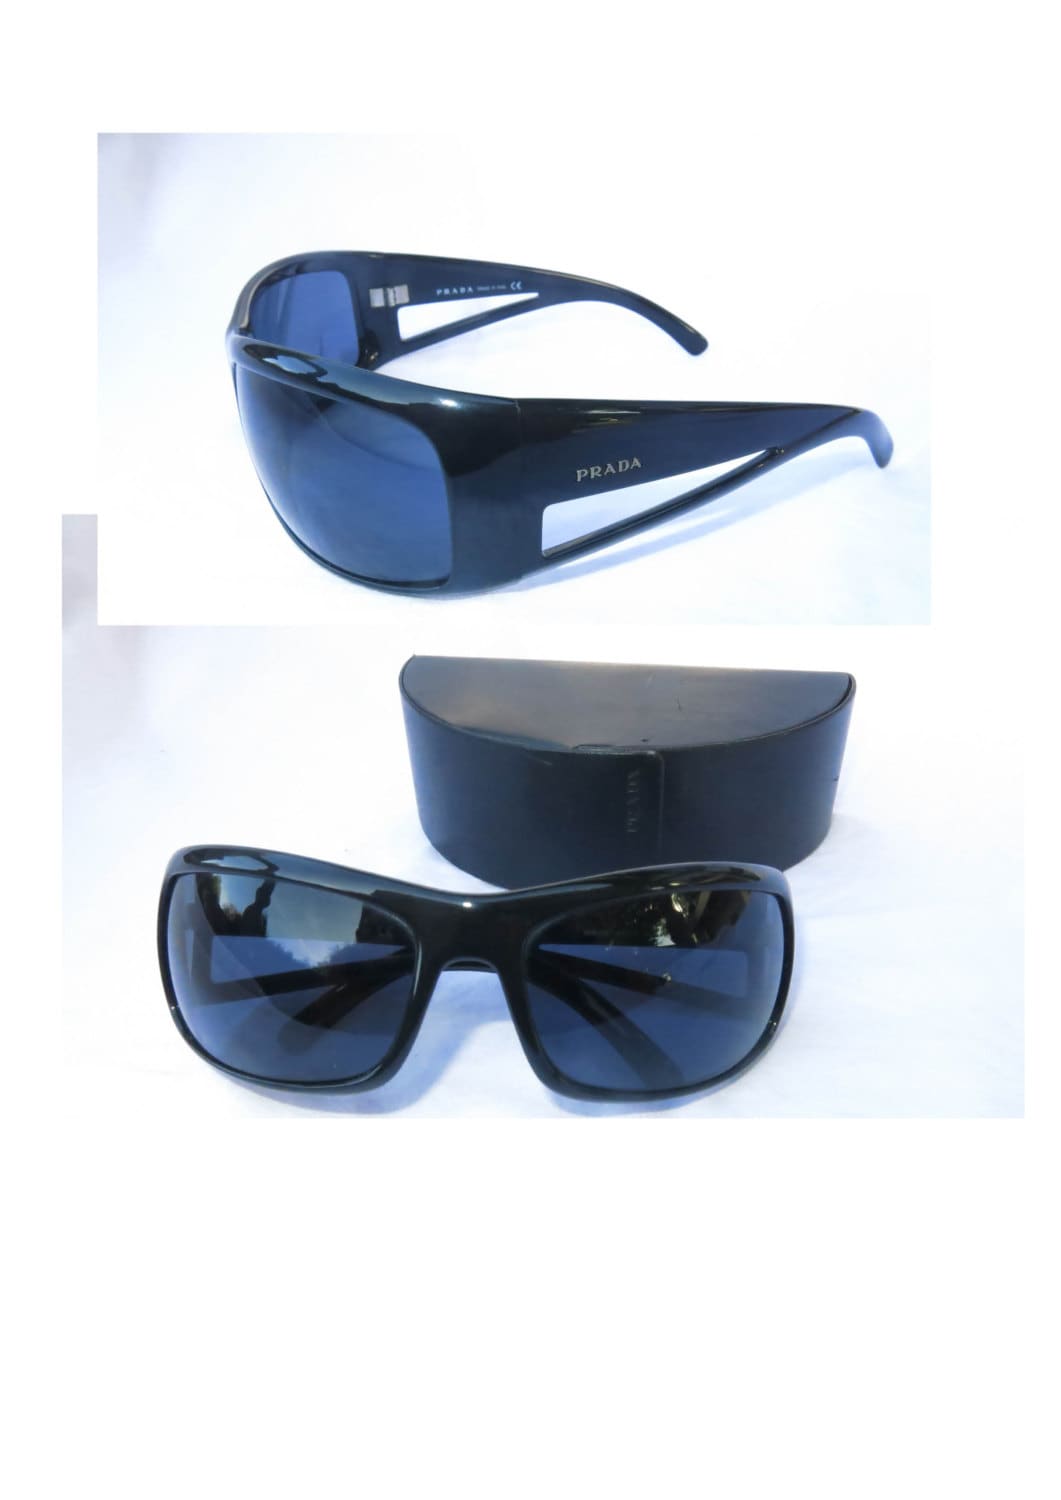 PRADA 90s vintage minimalistic shiny black curved shades SPR 09F 68 18